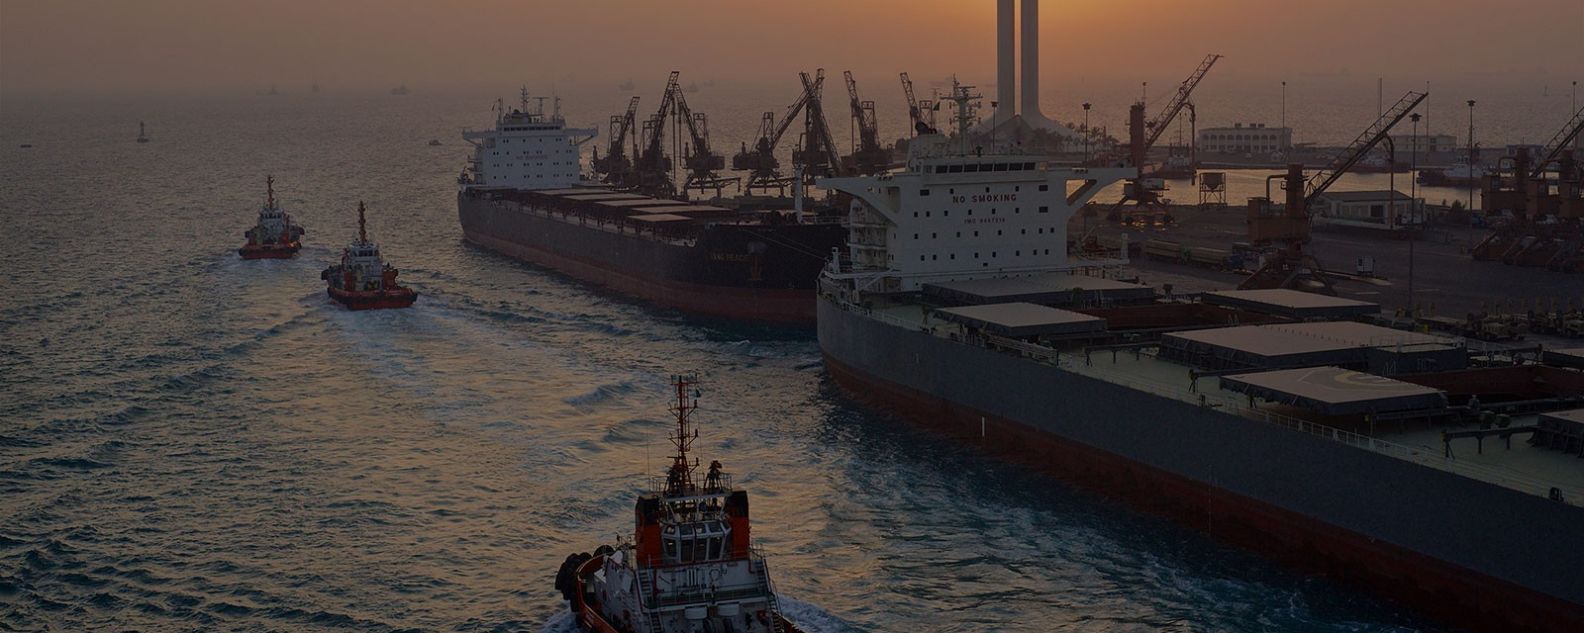 Tugs and freighter boats, Jeddah harbor, Saudi Arabia